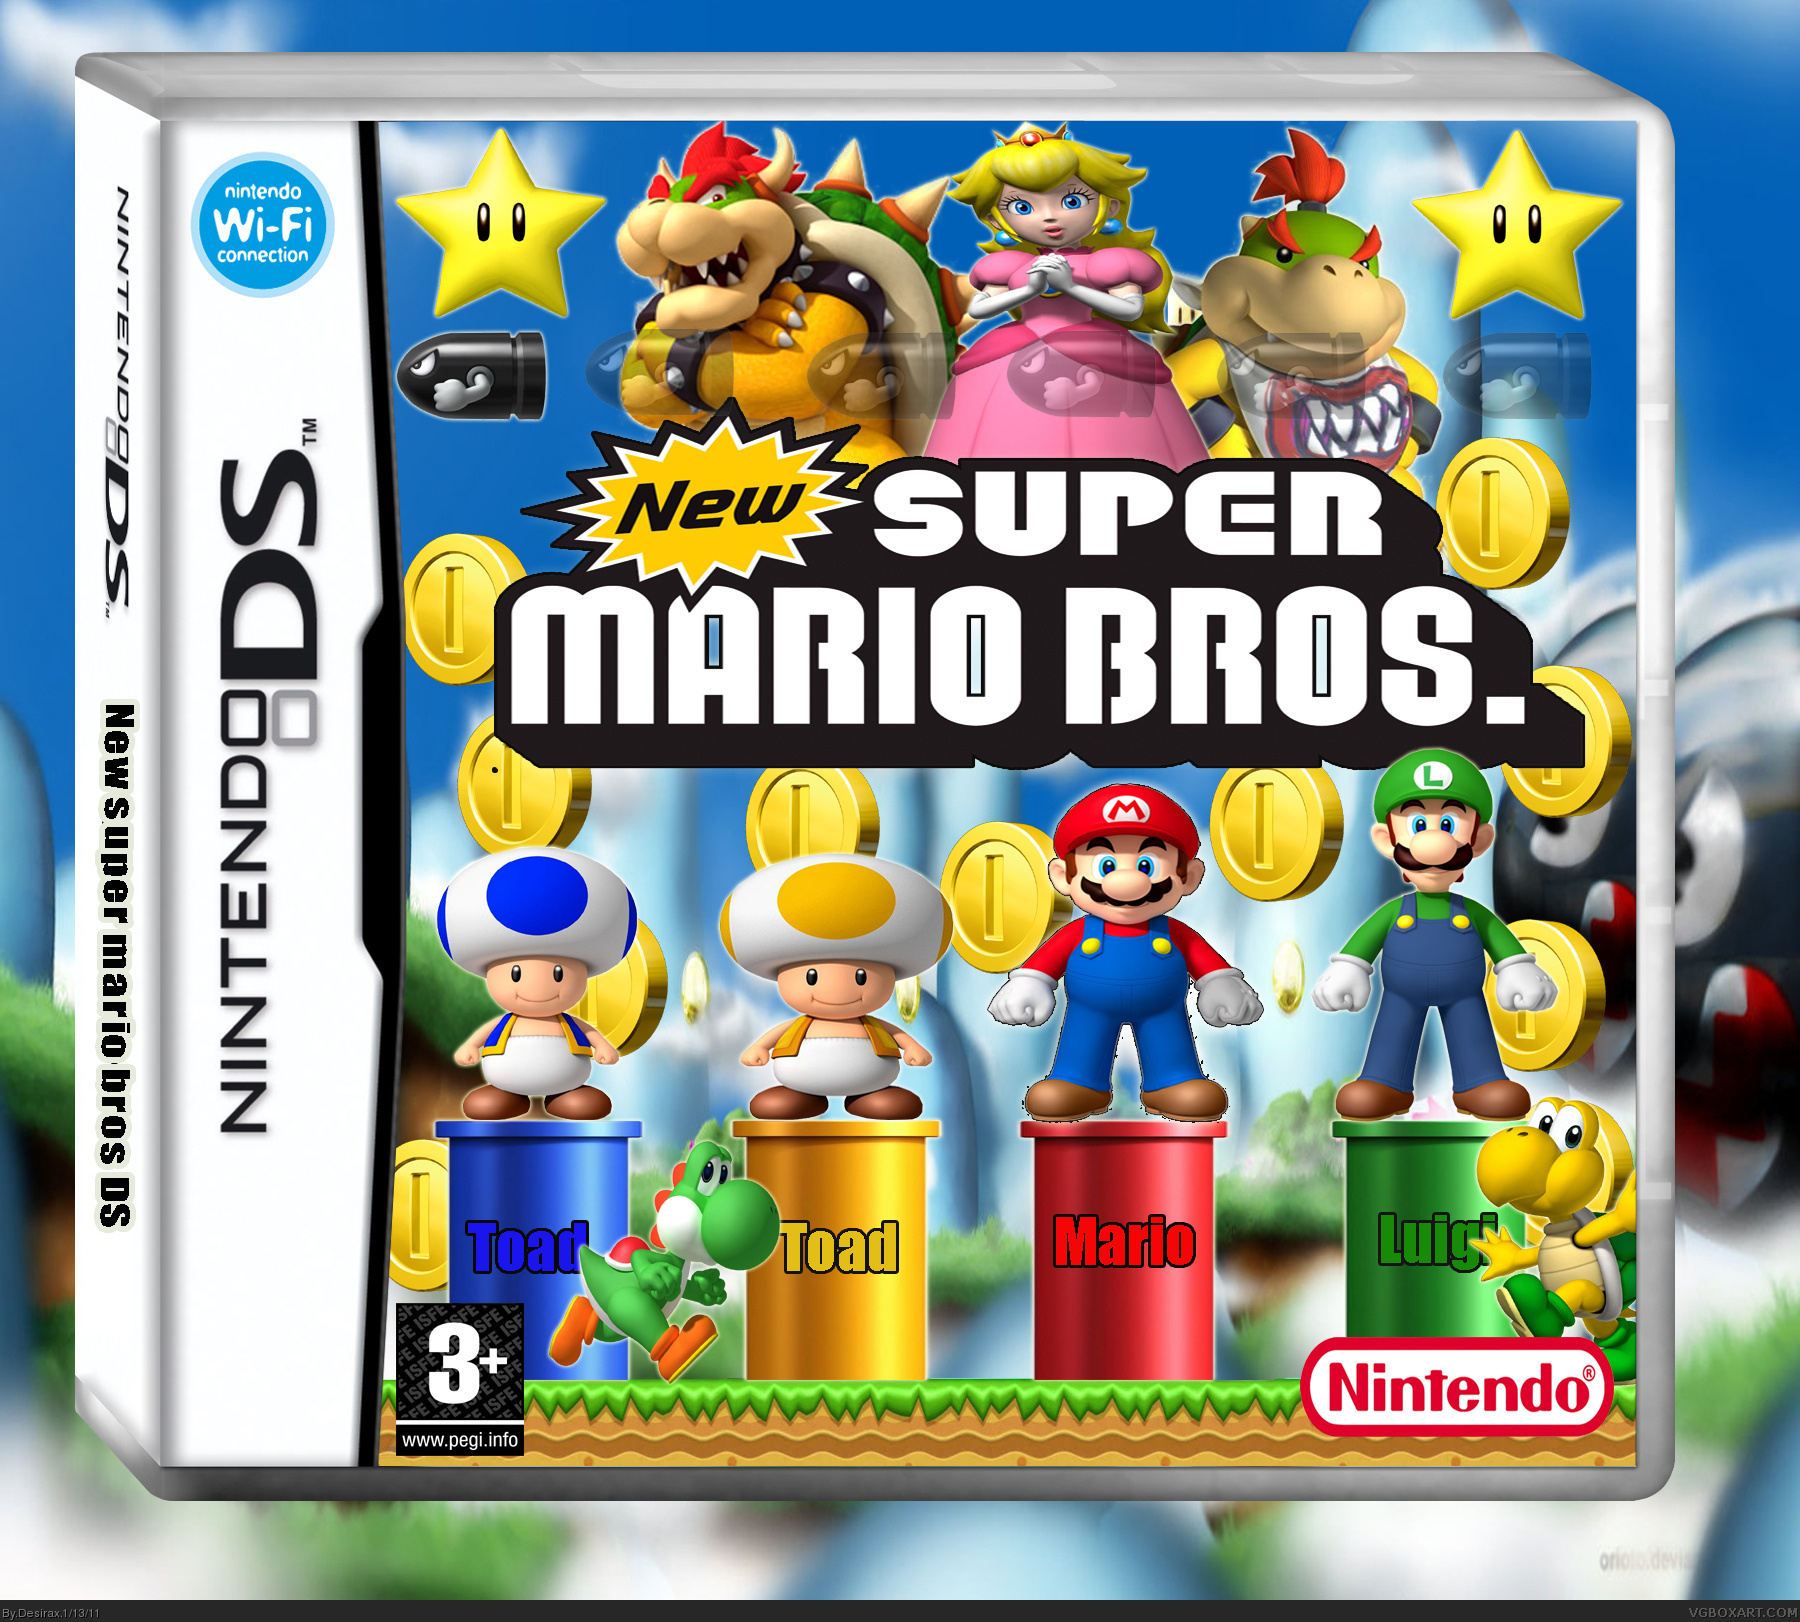 New Paper Mario Bros. box cover